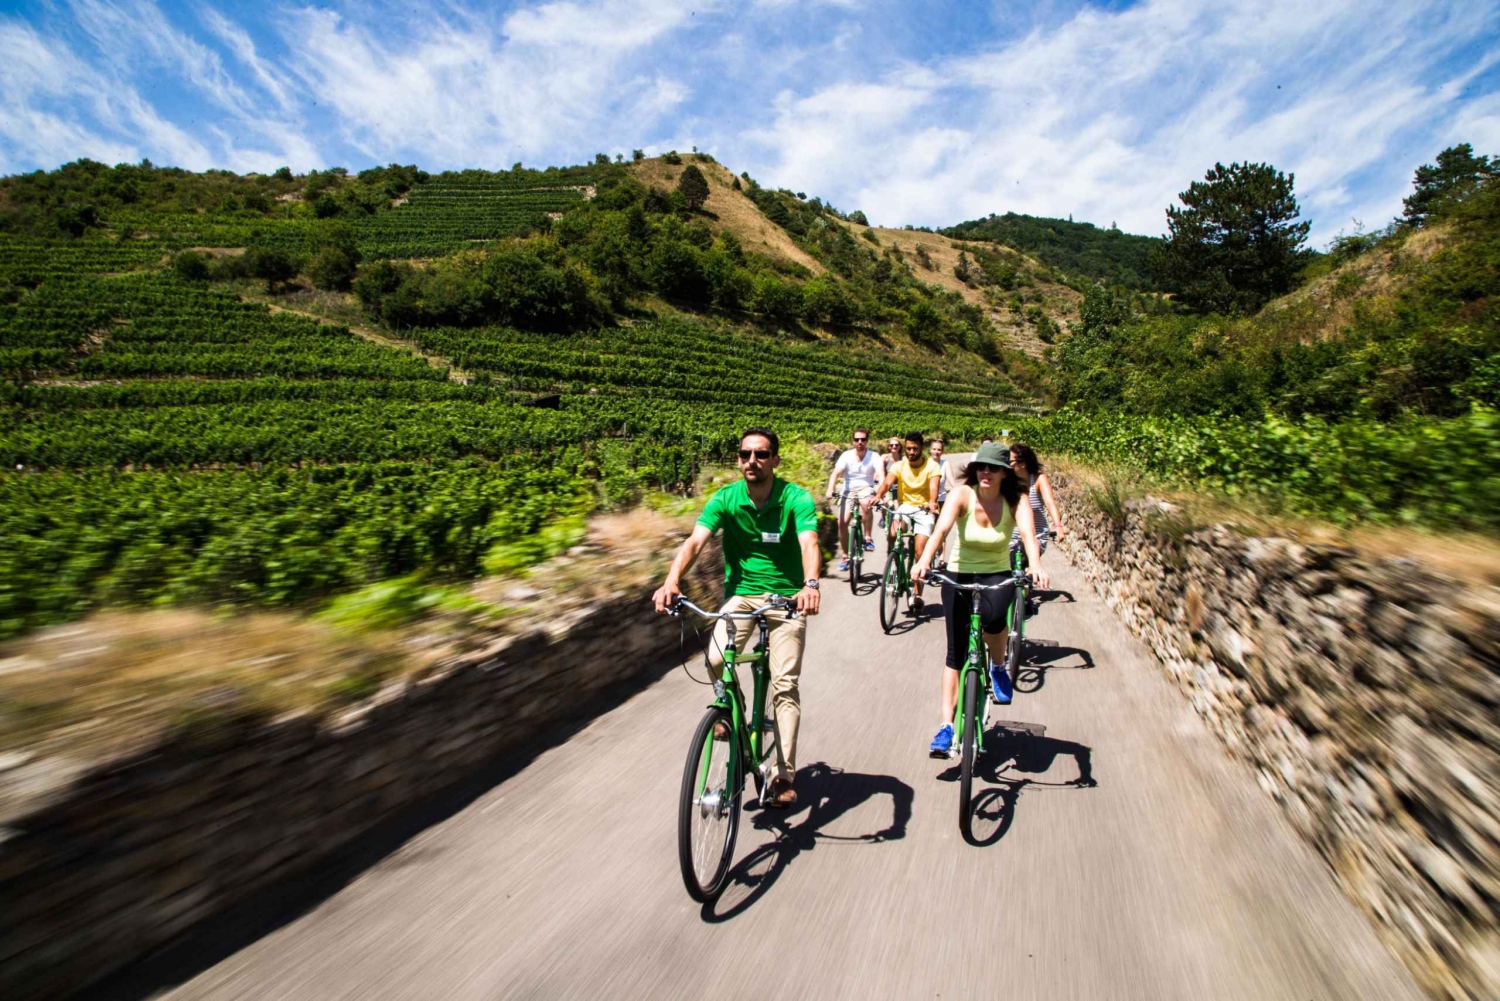 Fra Wien: Sykkeltur til vingårdene i Wachaudalen